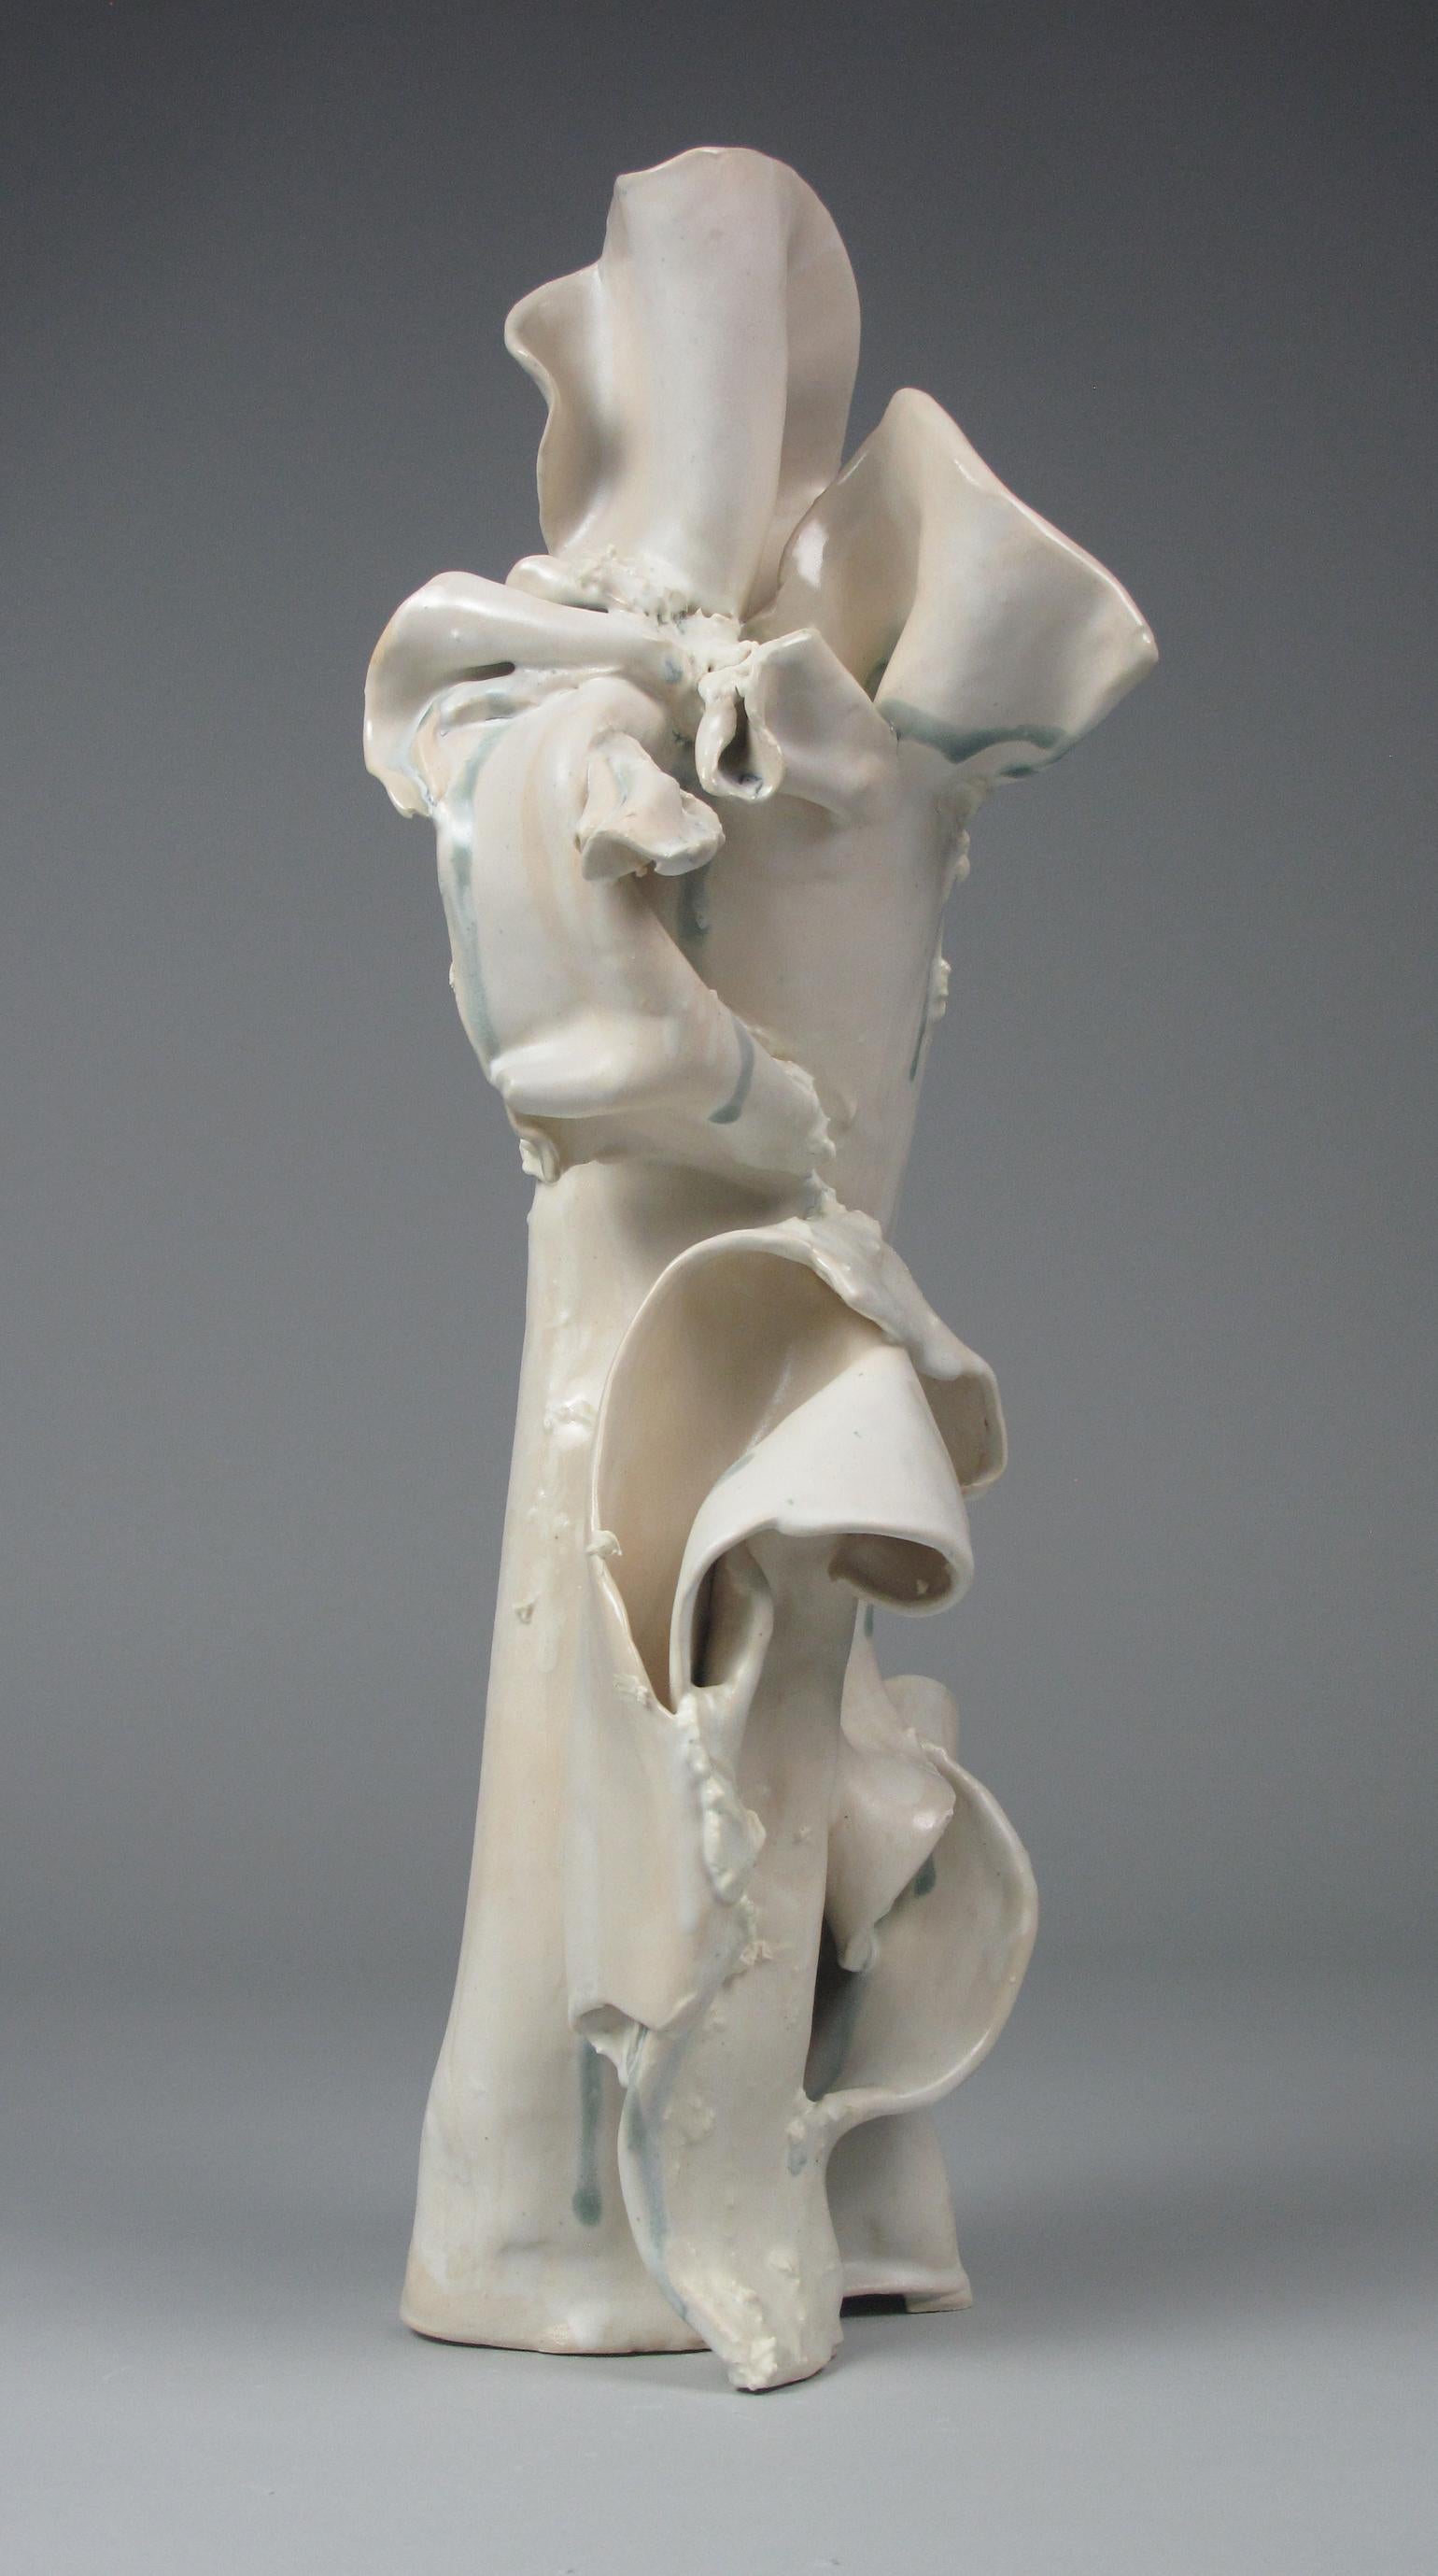 "Fold", gestural, ceramic, sculpture, white, cream, grey, blue, stoneware